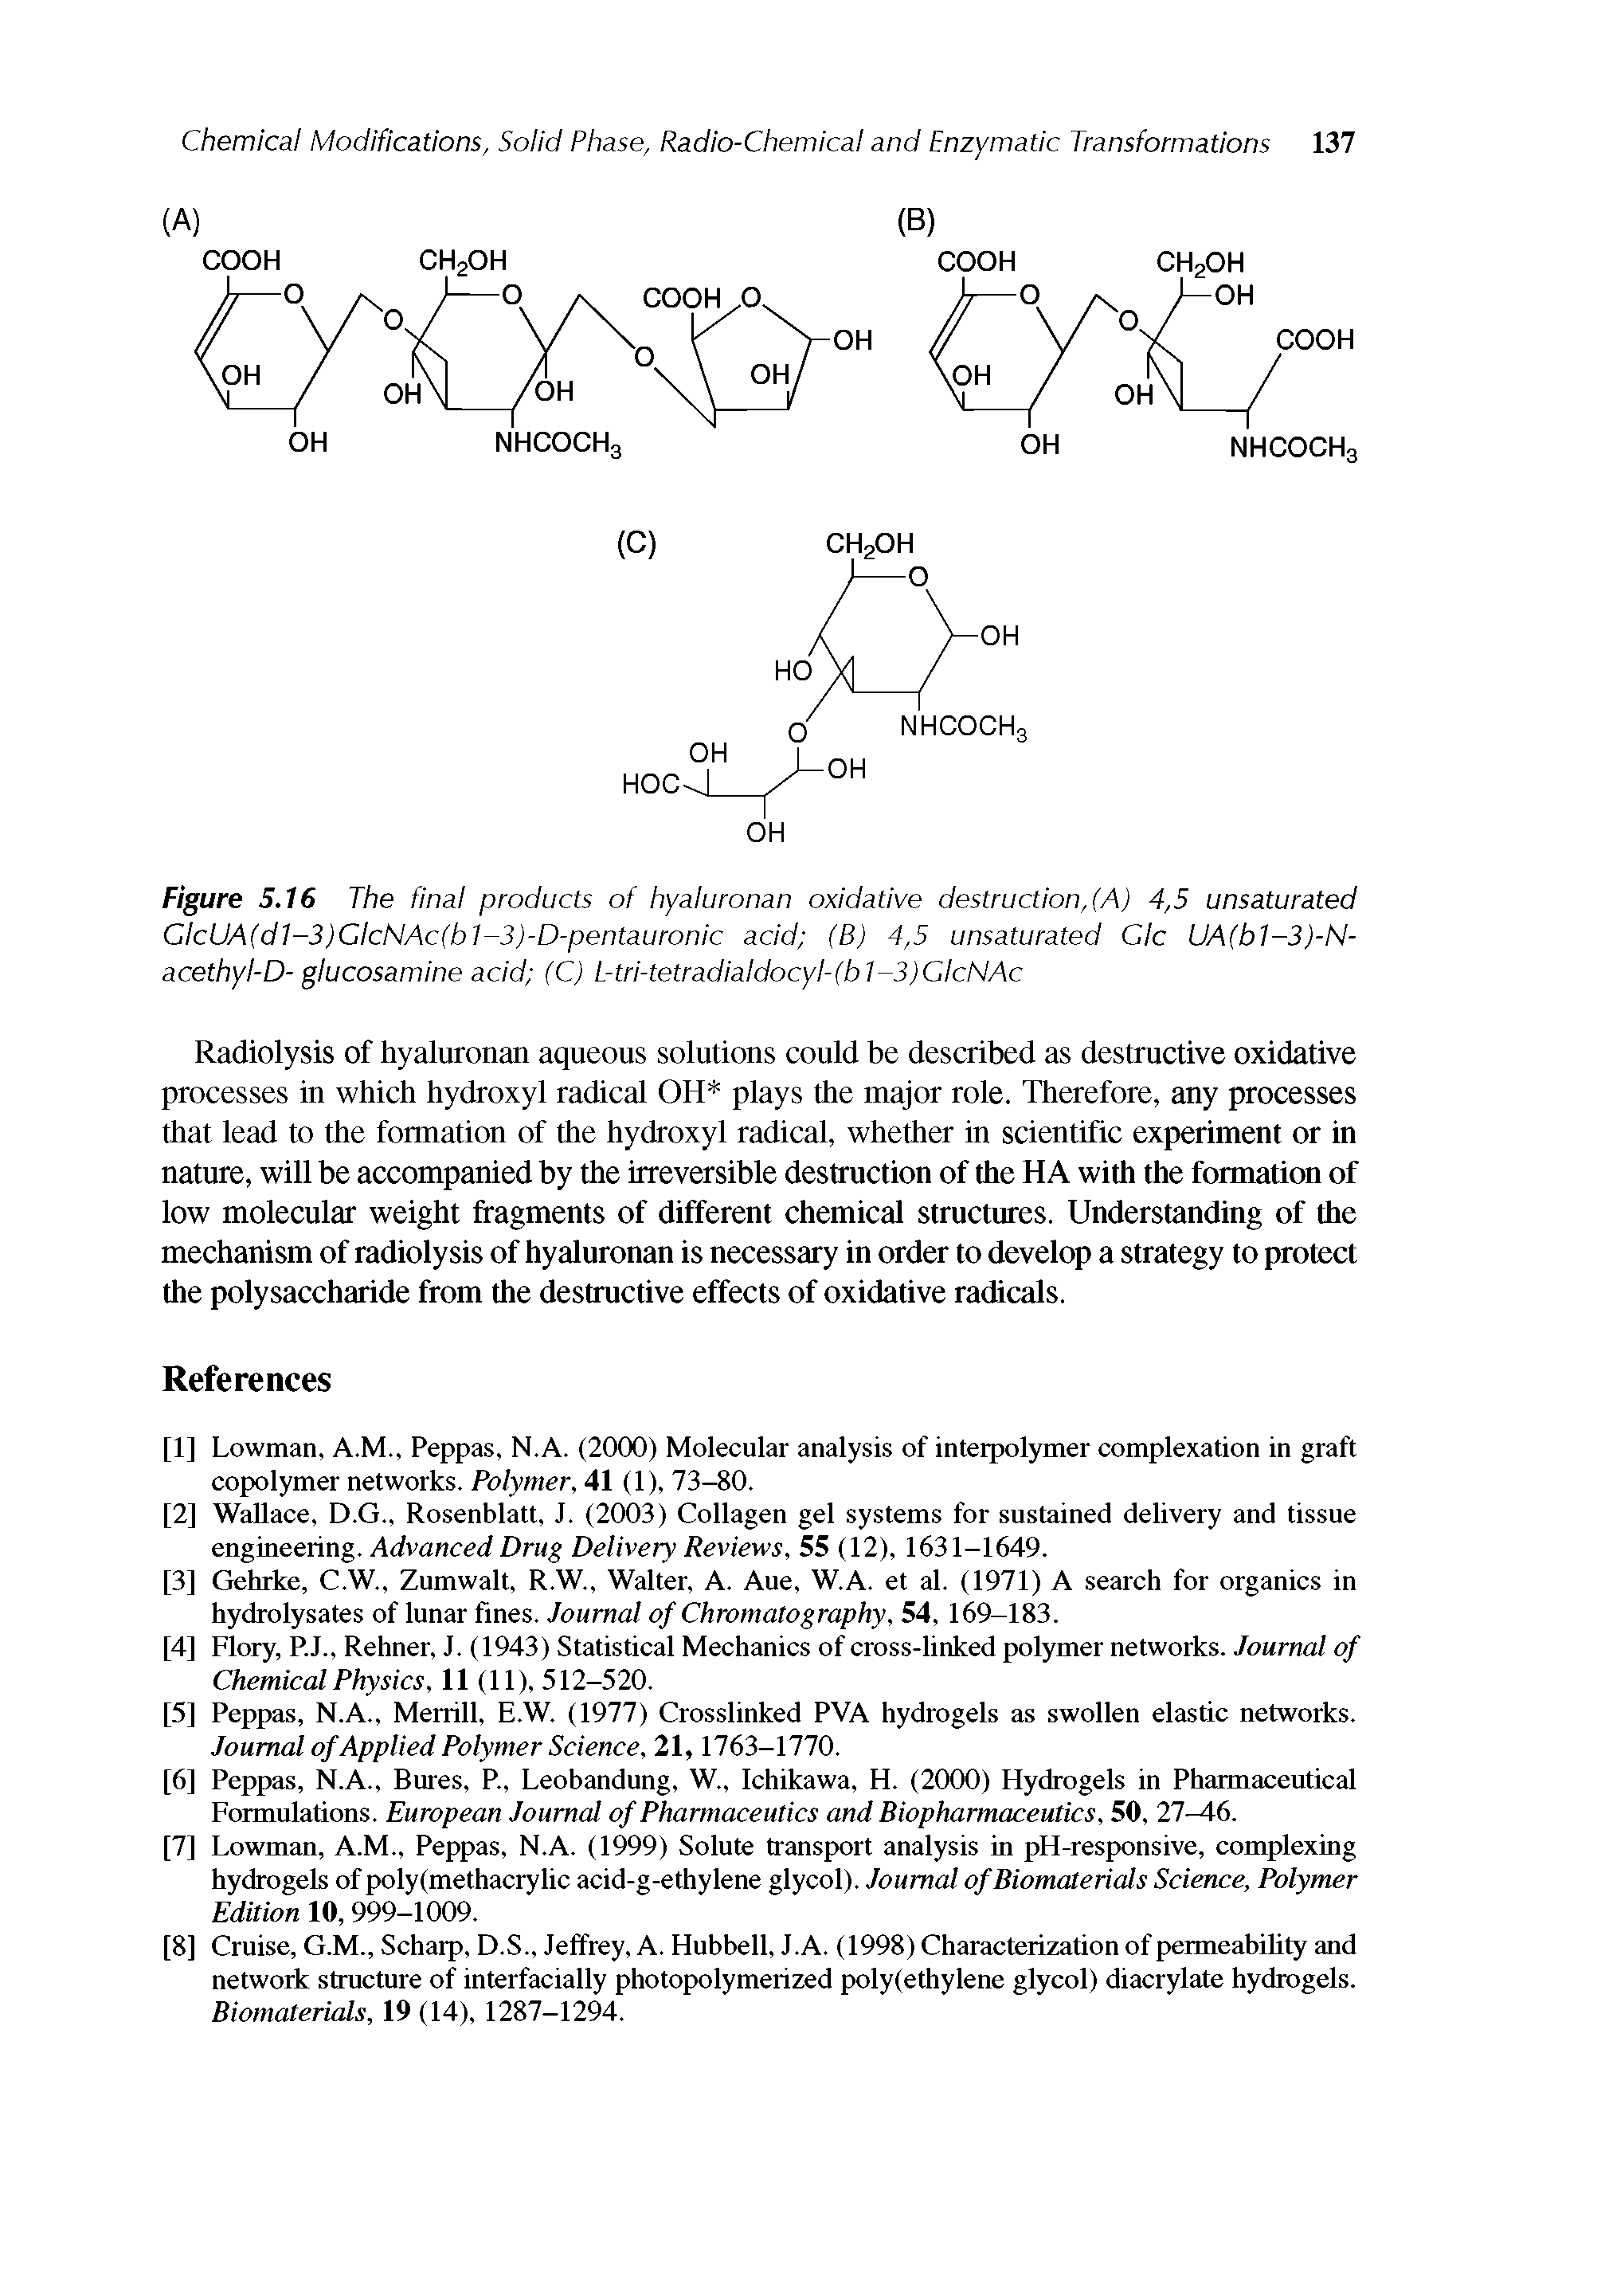 Figure 5.16 The final products of hyaiuronan oxidative destruction,(A) 4,5 unsaturated ClcUA(d1-3)ClcNAc(bi-3)-D-pentauronic acid (B) 4,5 unsaturated Glc UA(bl-3)-N-acethyl-D- glucosamine acid (C) L-tri-tetradialdocyl-(bi-3)ClcNAc...